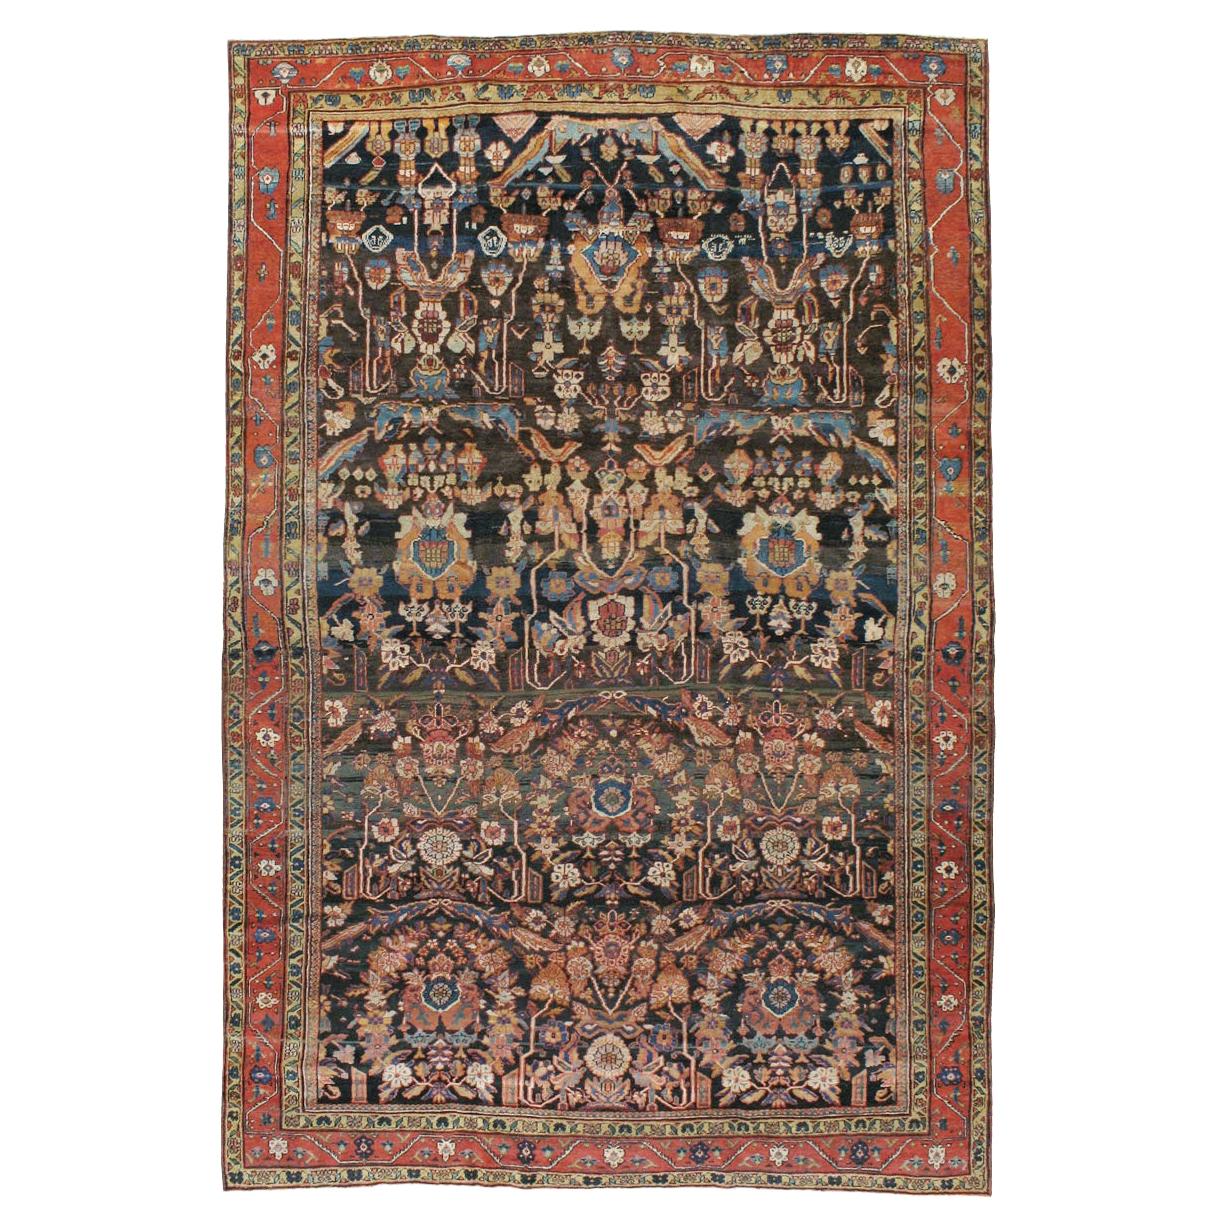 Early 20th Century Handmade Persian Mahal Room Size Carpet